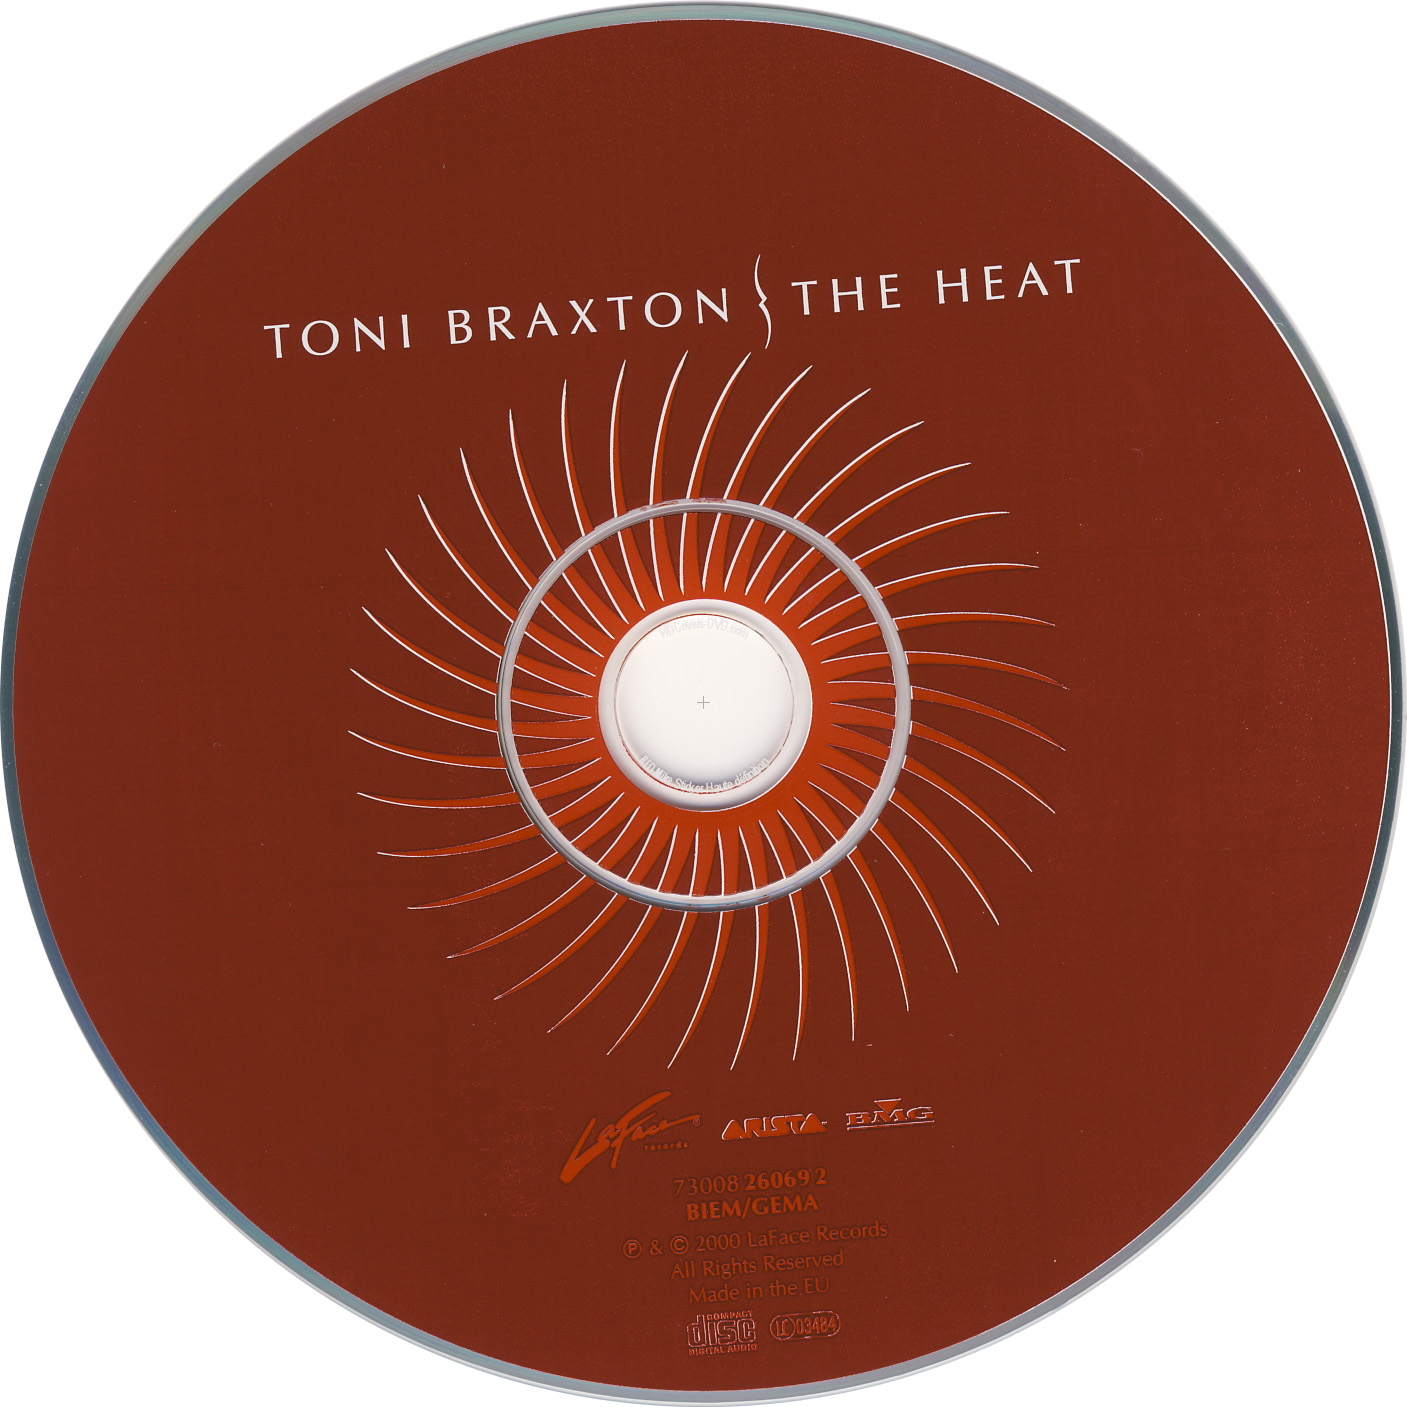 toni braxton and babyface full album free download zip